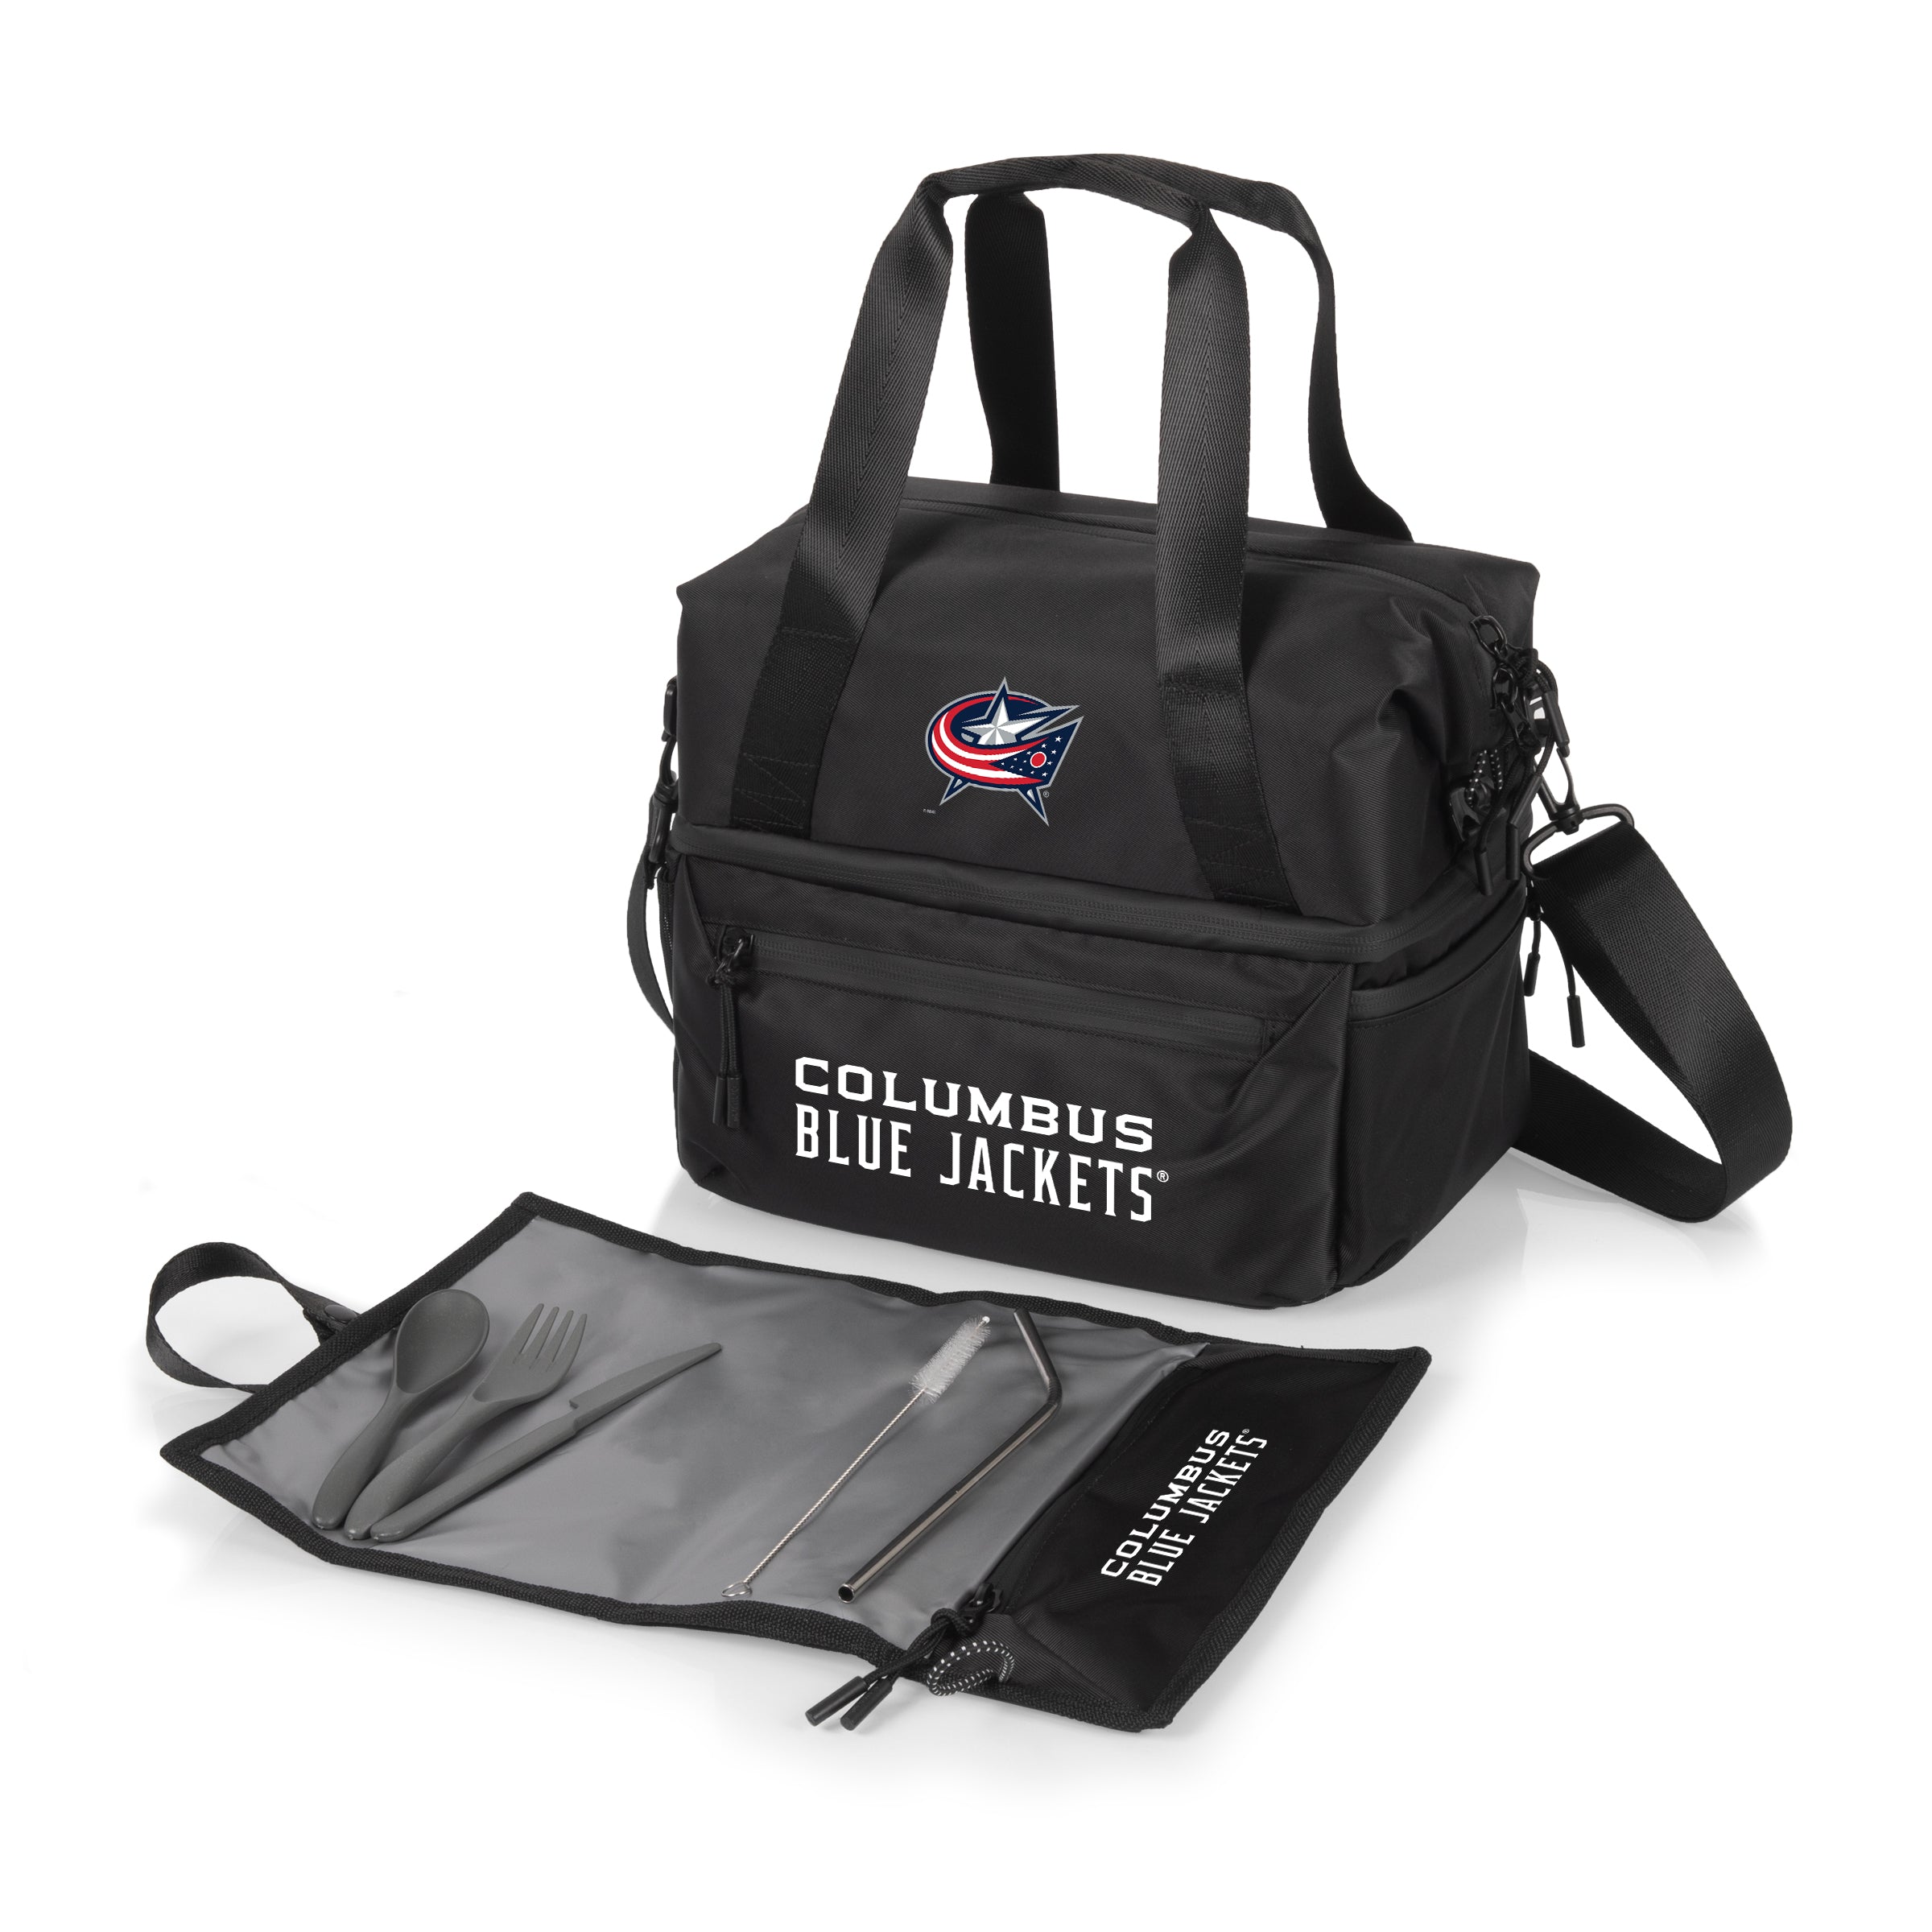 Columbus Blue Jackets - Tarana Lunch Bag Cooler with Utensils